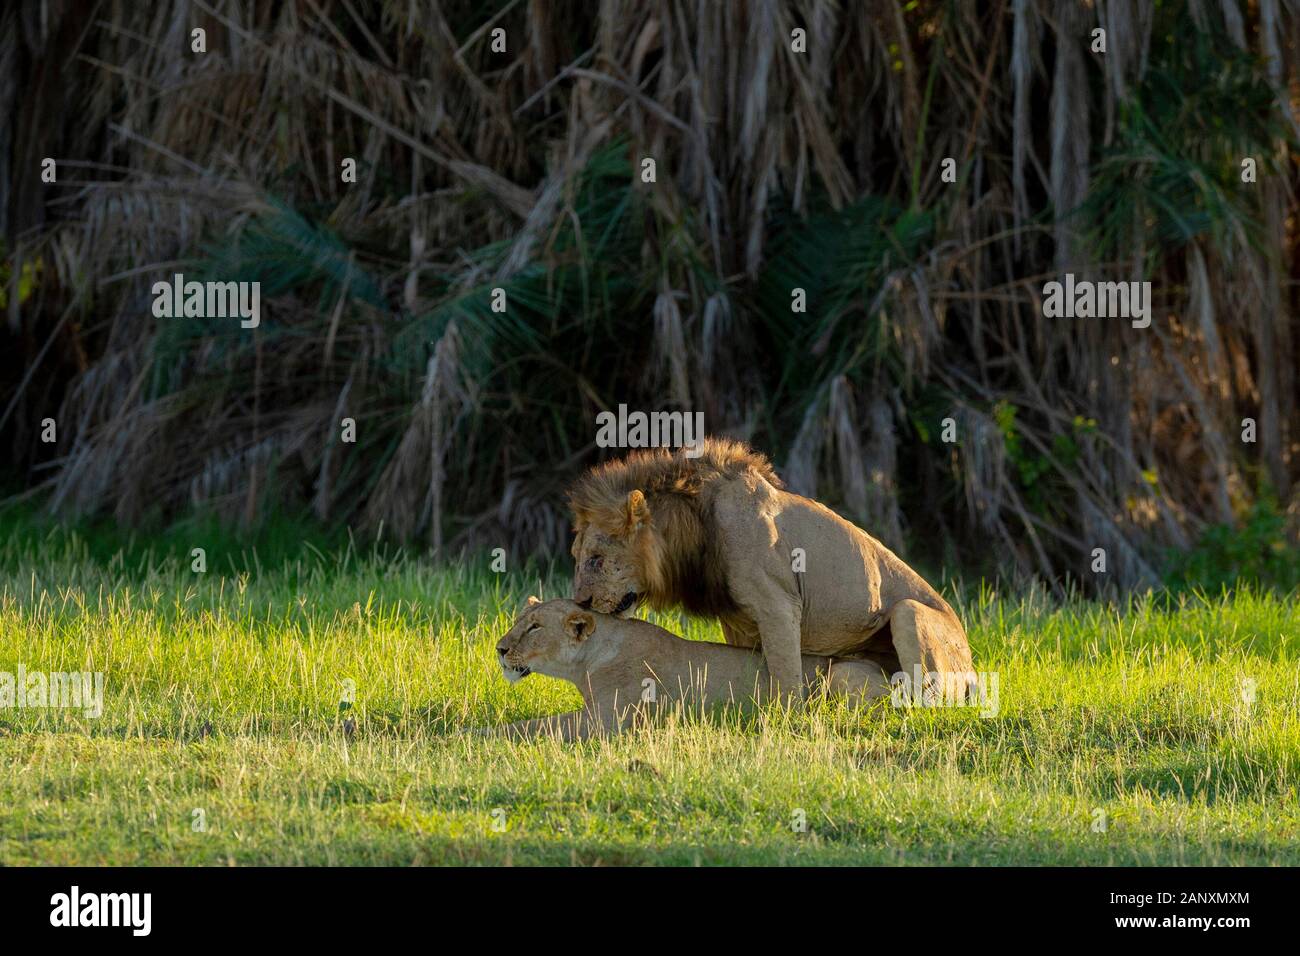 Lions In Accoppiamento Al Parco Nazionale Di Amboseli, Kenya, Africa Foto Stock